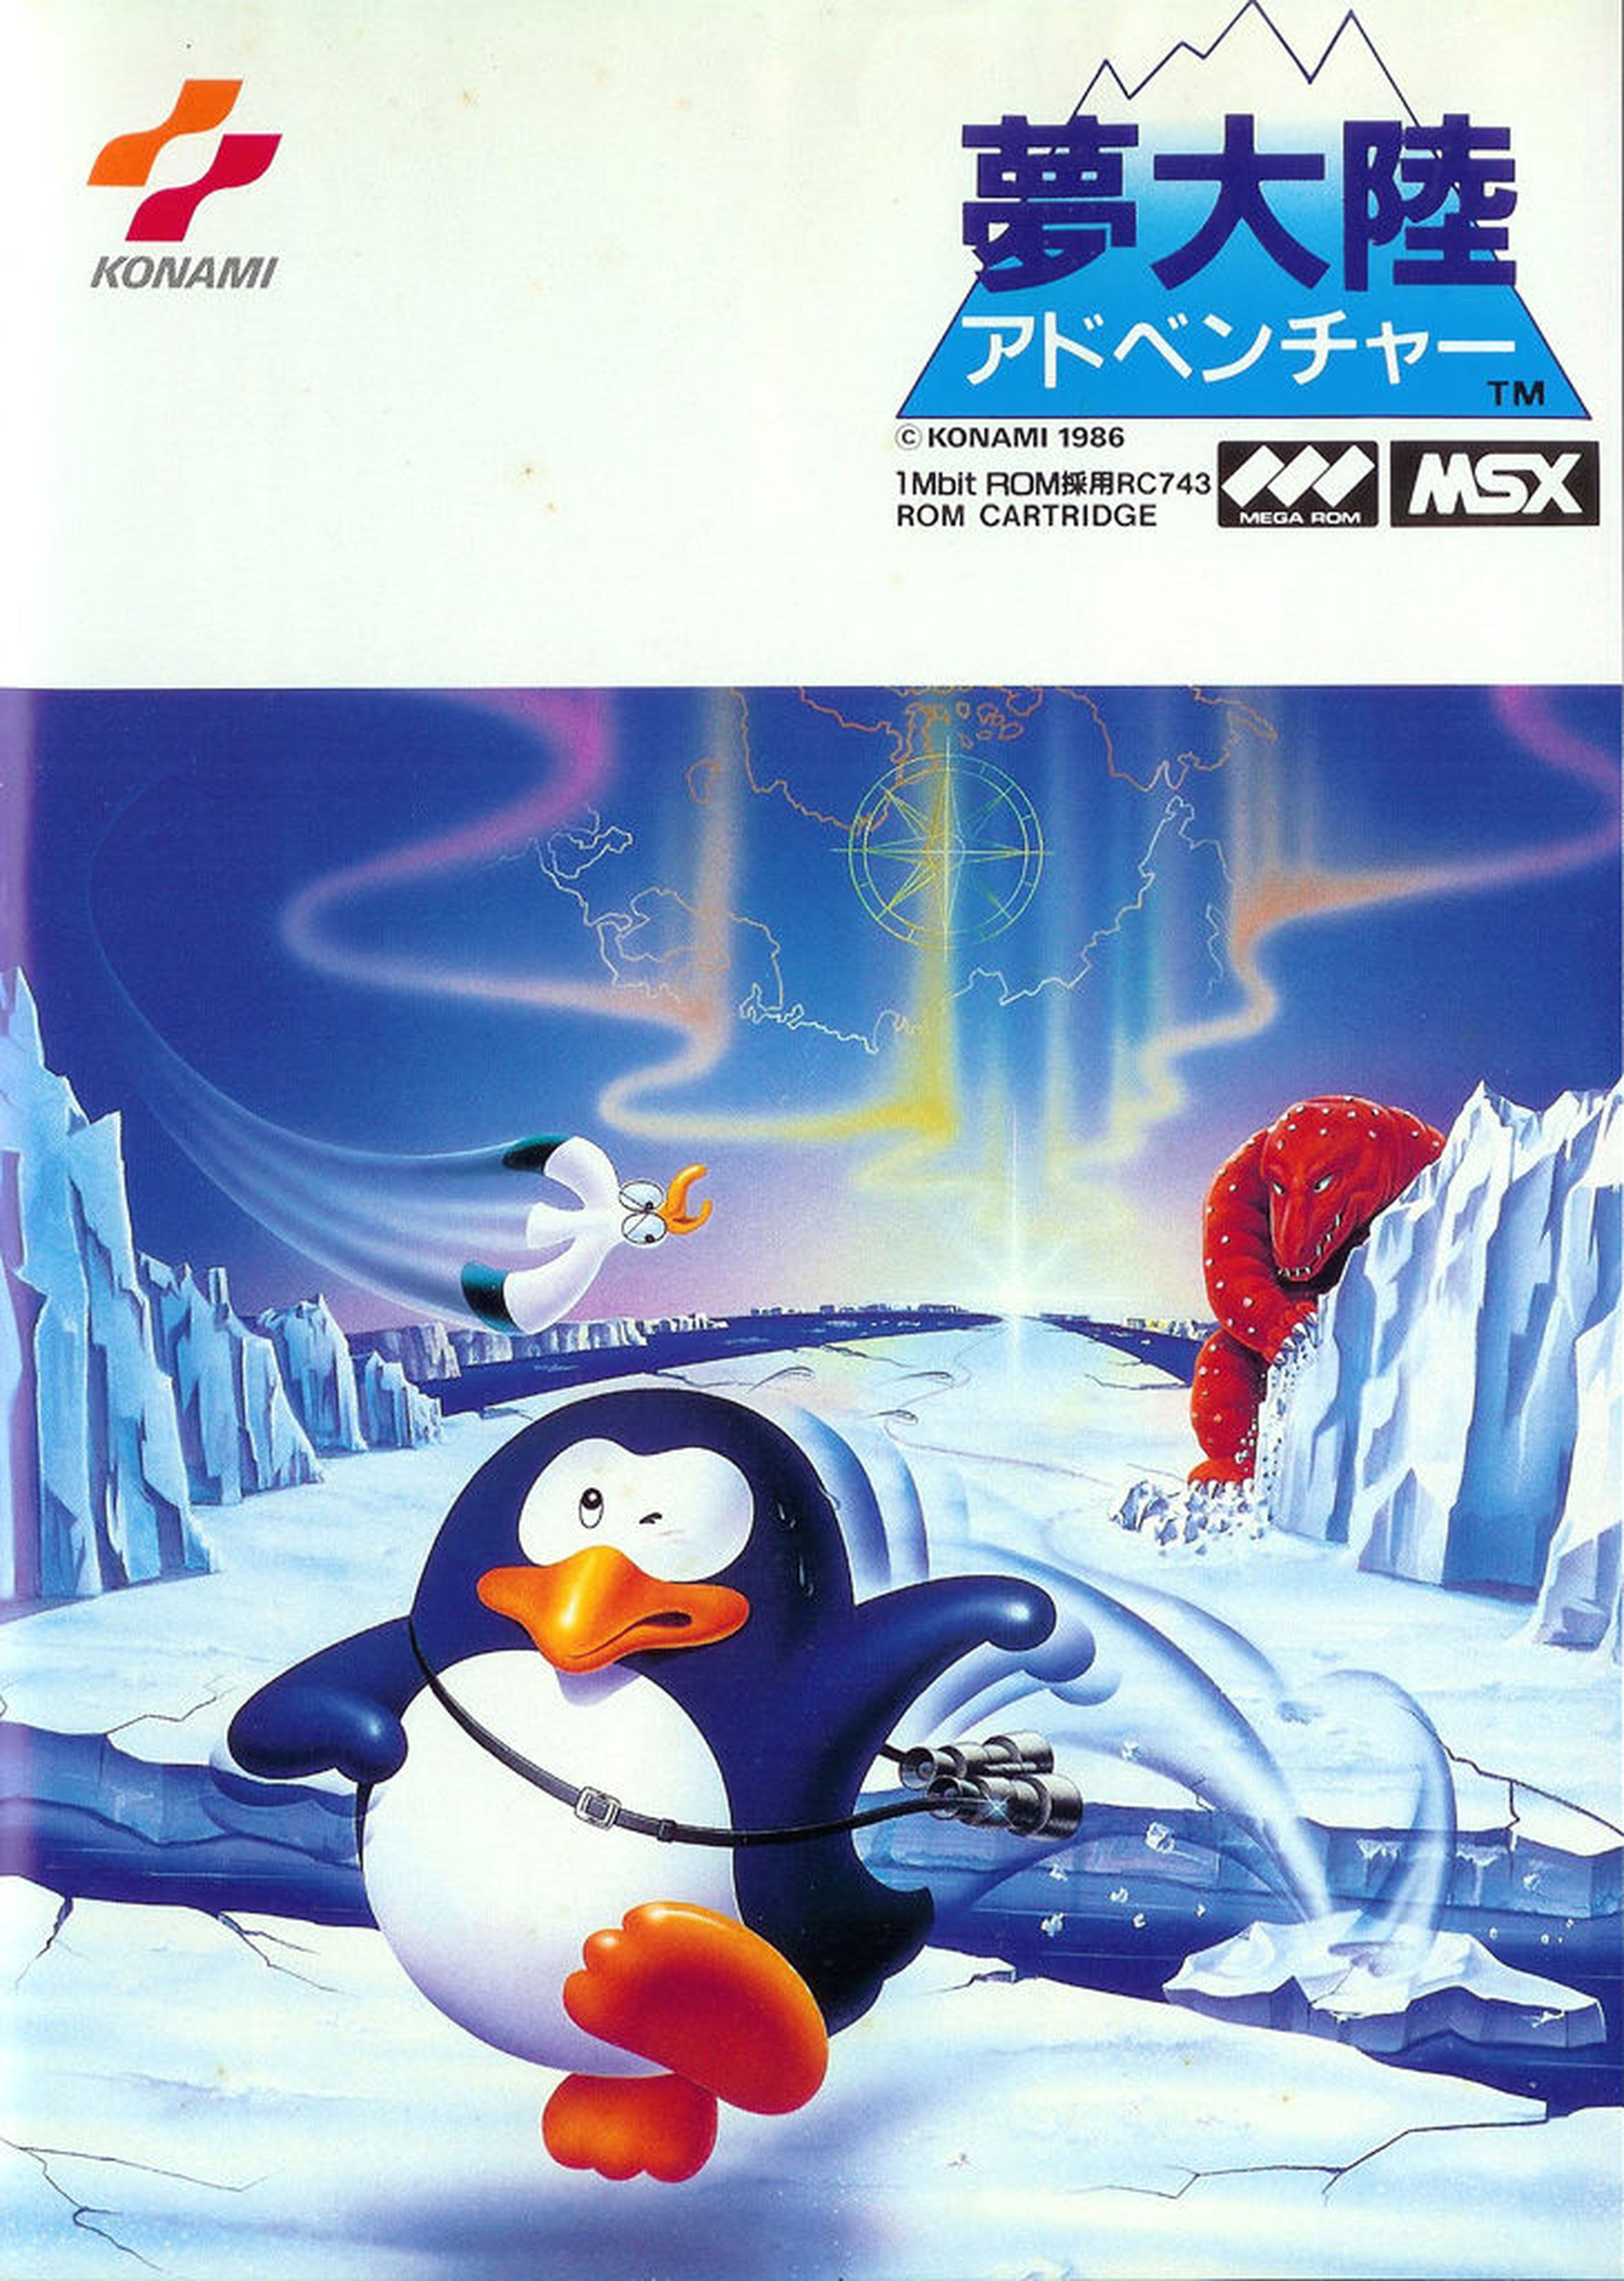 TIO BRUNO KOJIMA penguin adventure